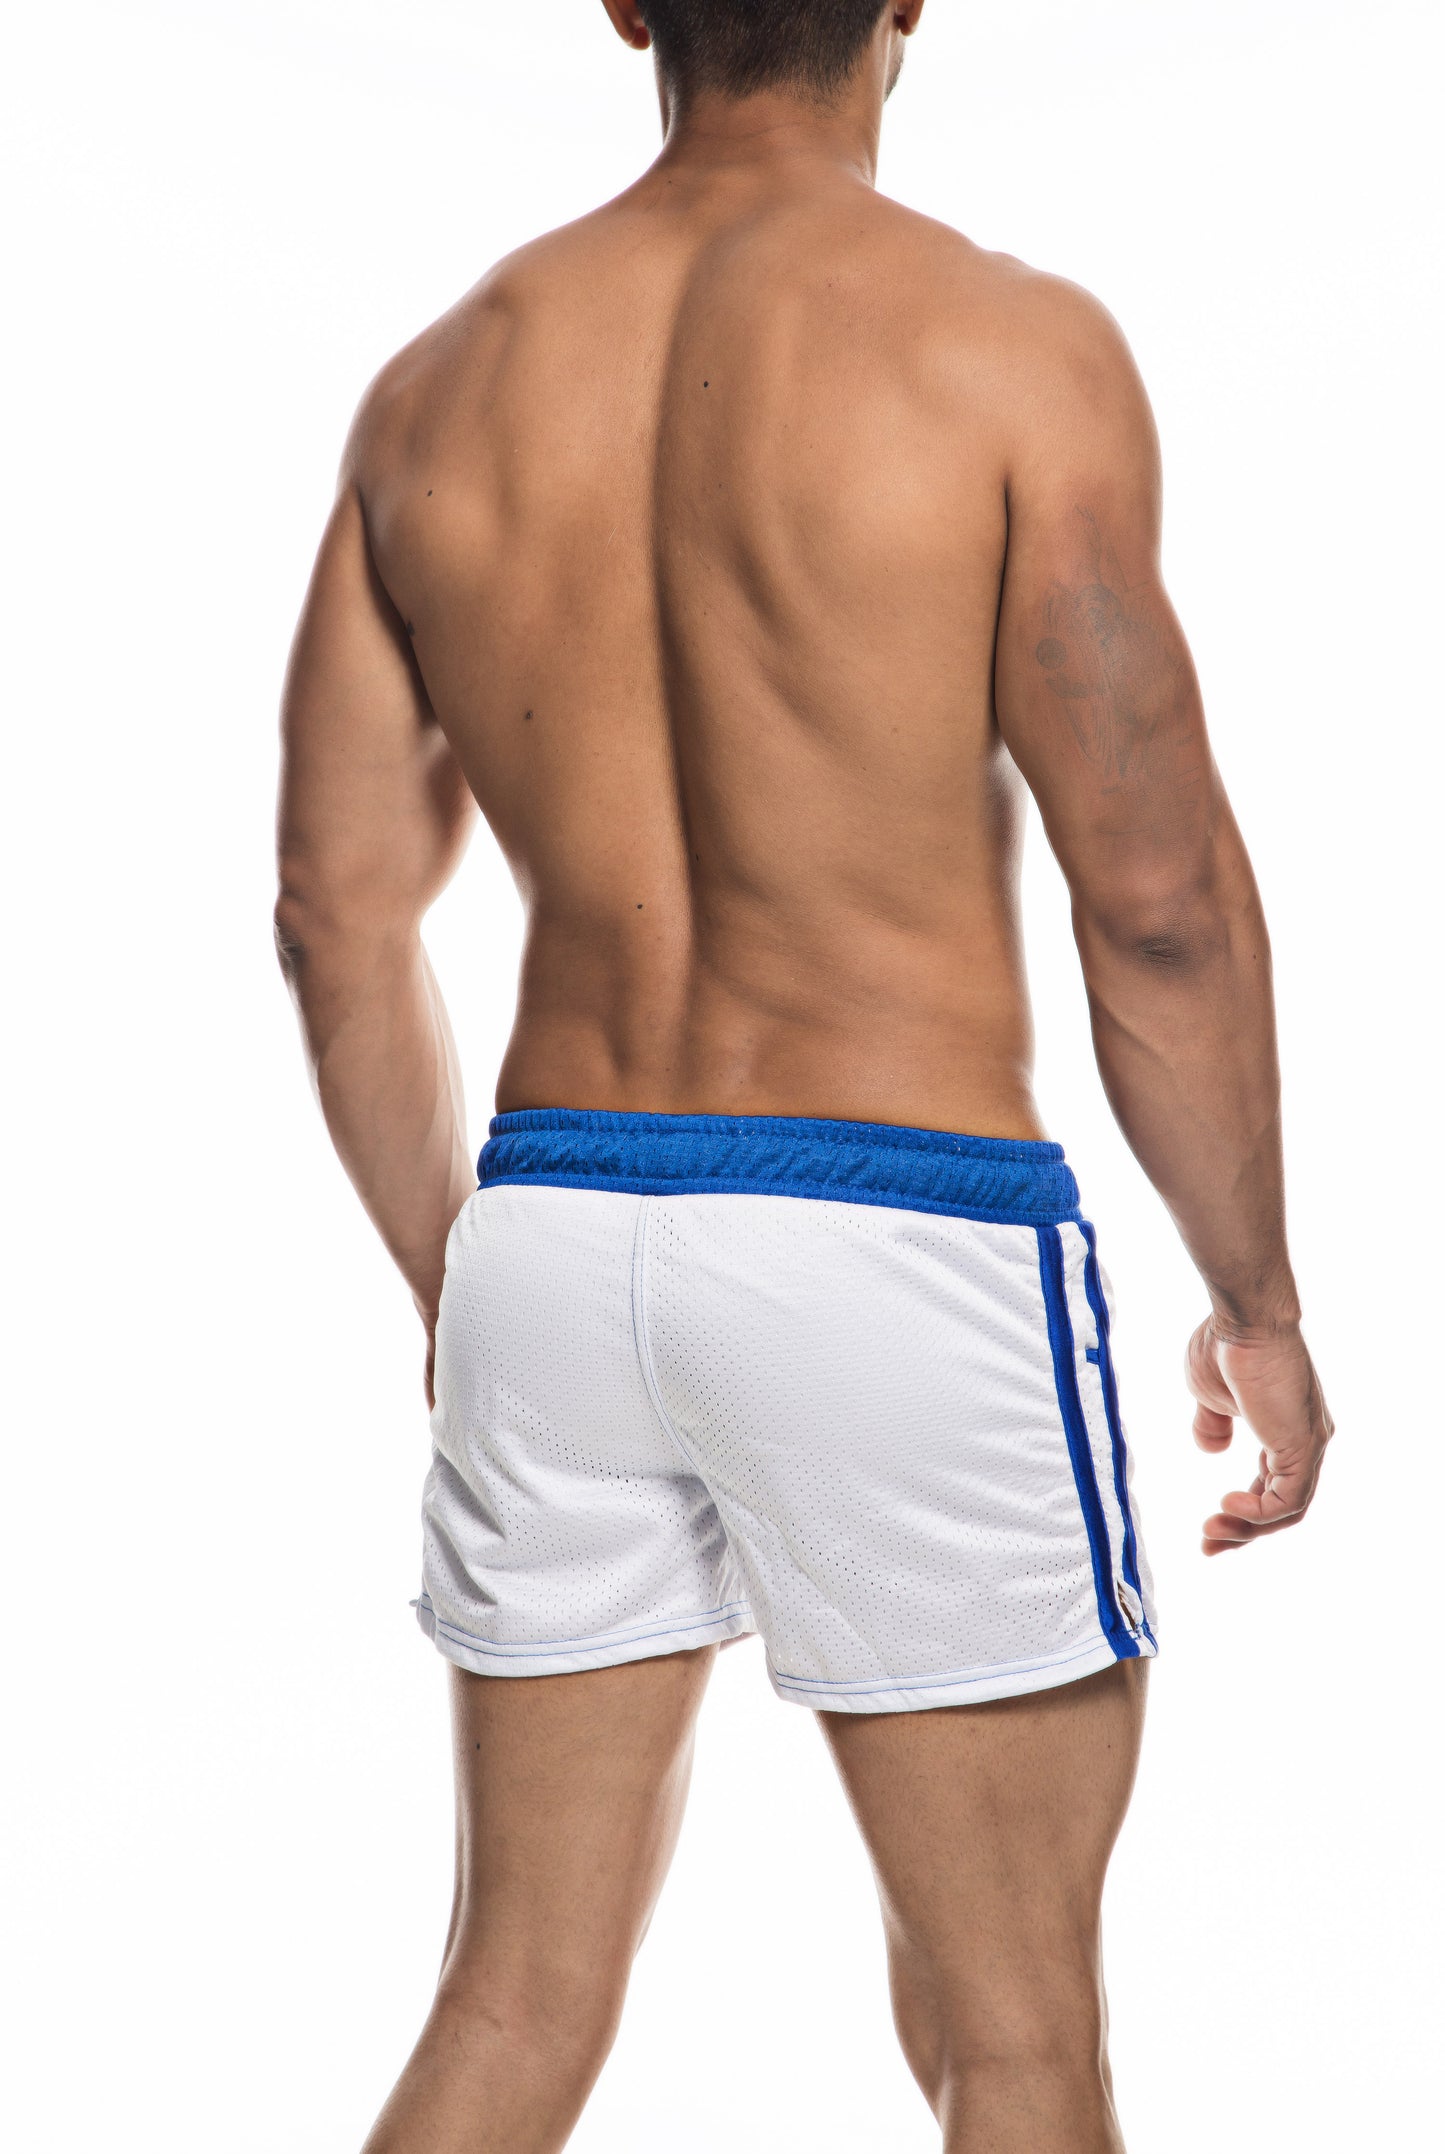 Men's Swim Trunks Mesh Lined Shorts, Sport Boxer And Home wear